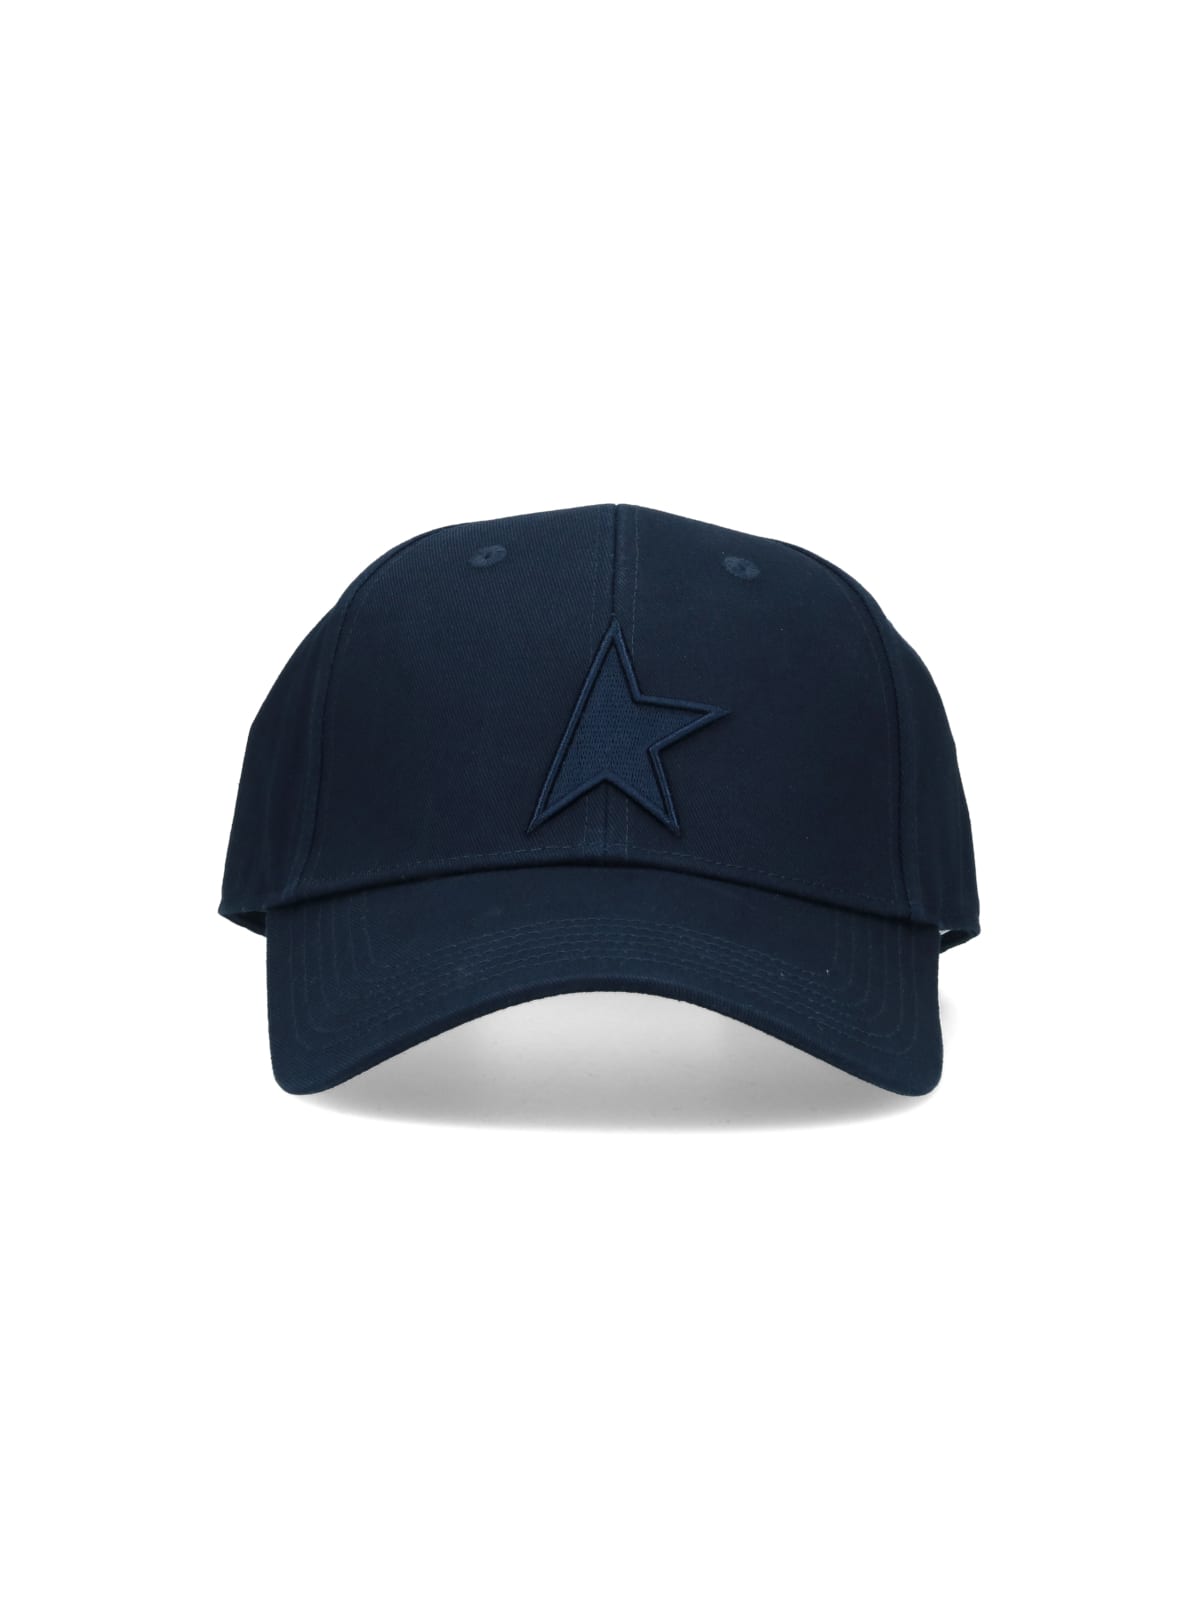 GOLDEN GOOSE STAR BASEBALL CAP